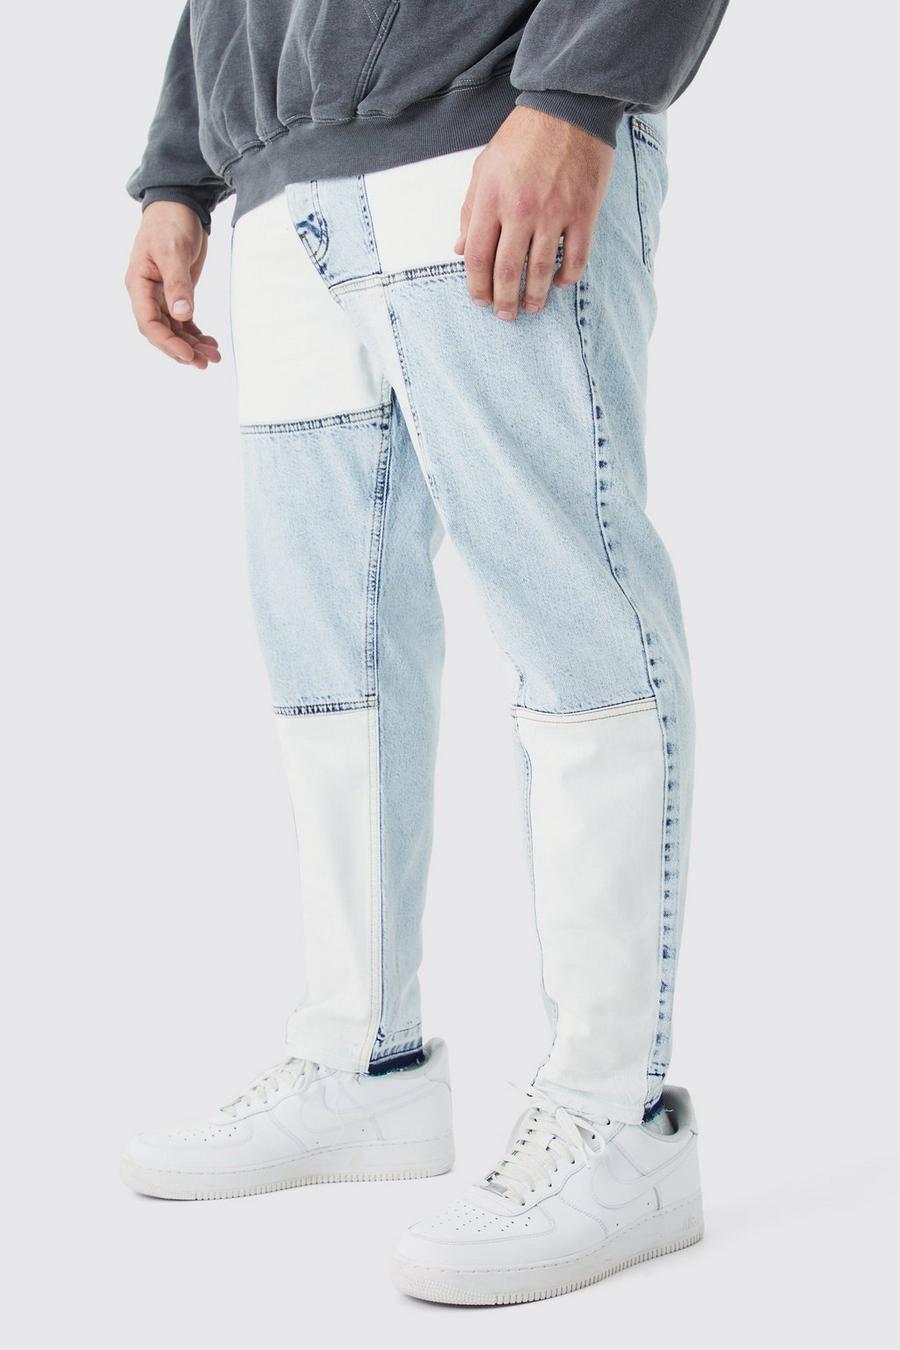 Ice blue teplaky adidas originals j fleece pants junior